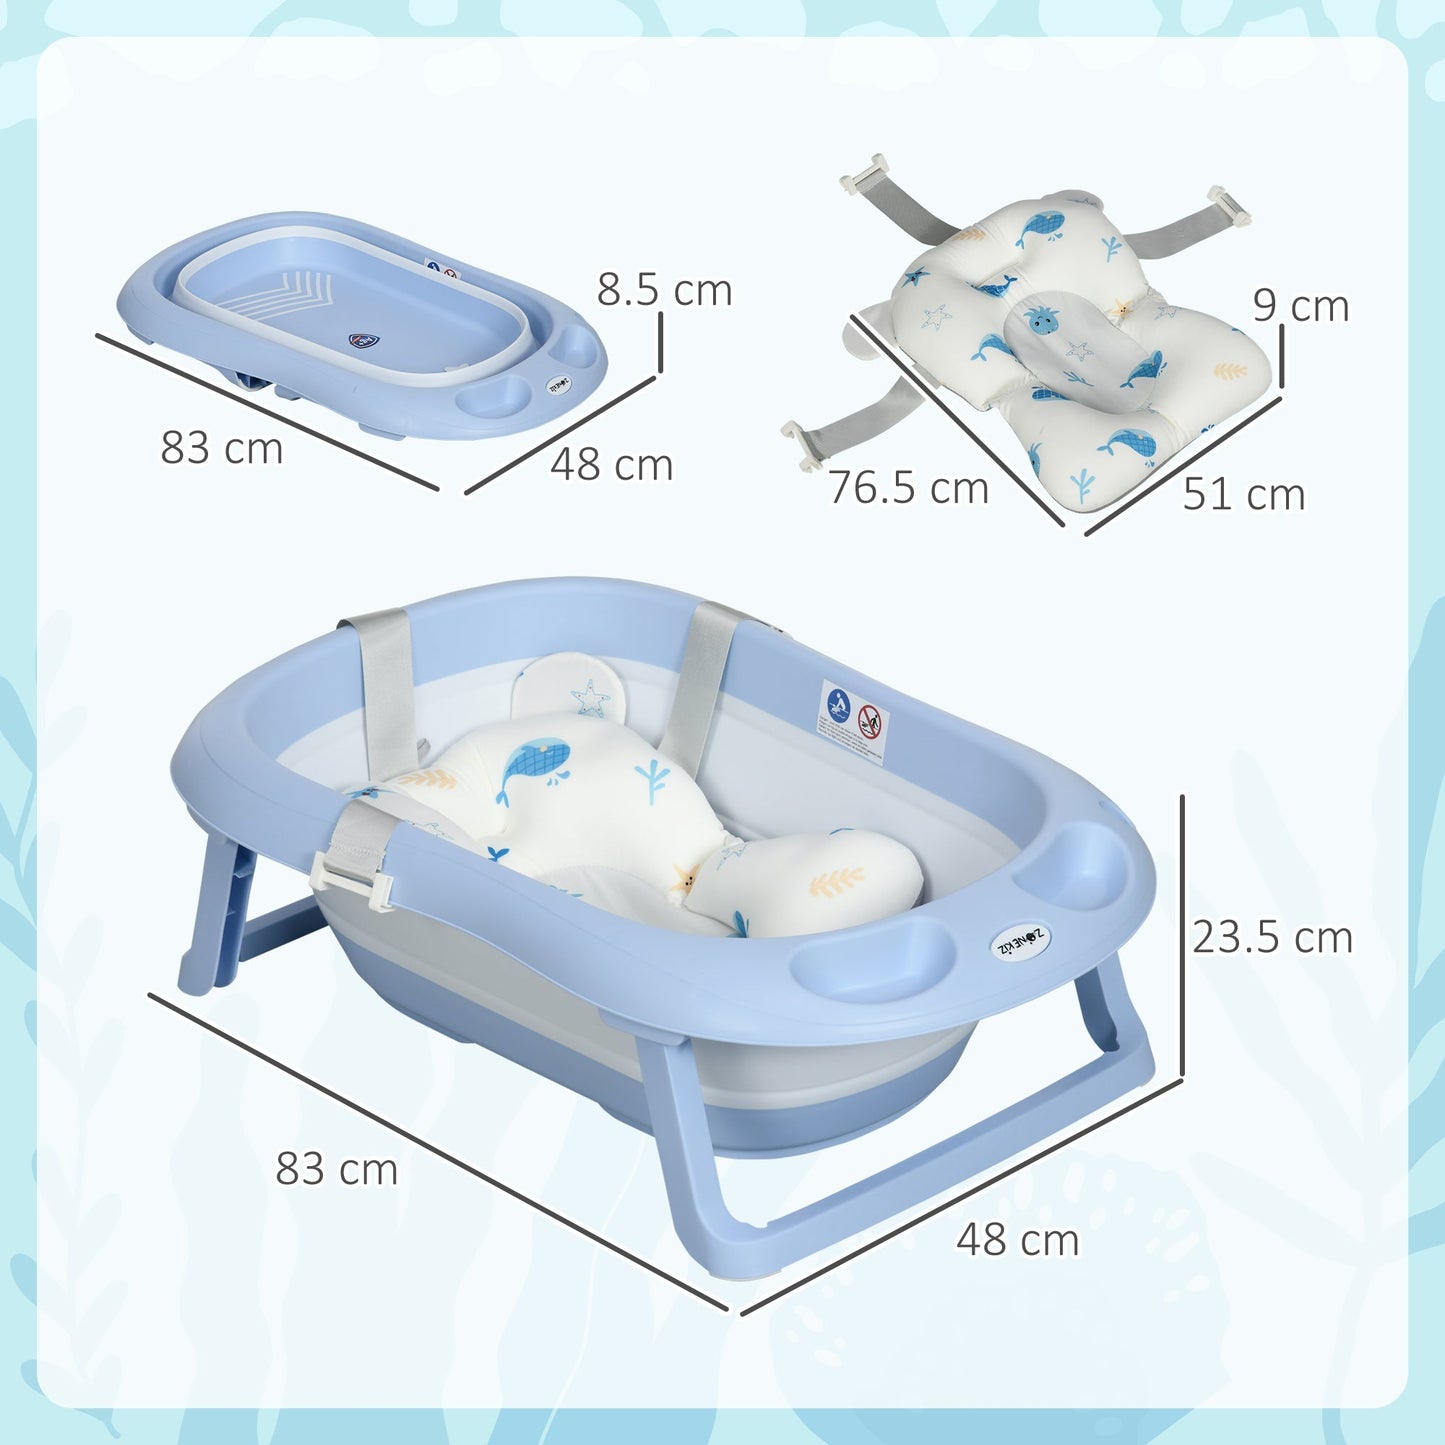 ZONEKIZ Foldable Baby Bathtub, with Non-Slip Support Legs, Cushion Pad, Shower Holder - Blue